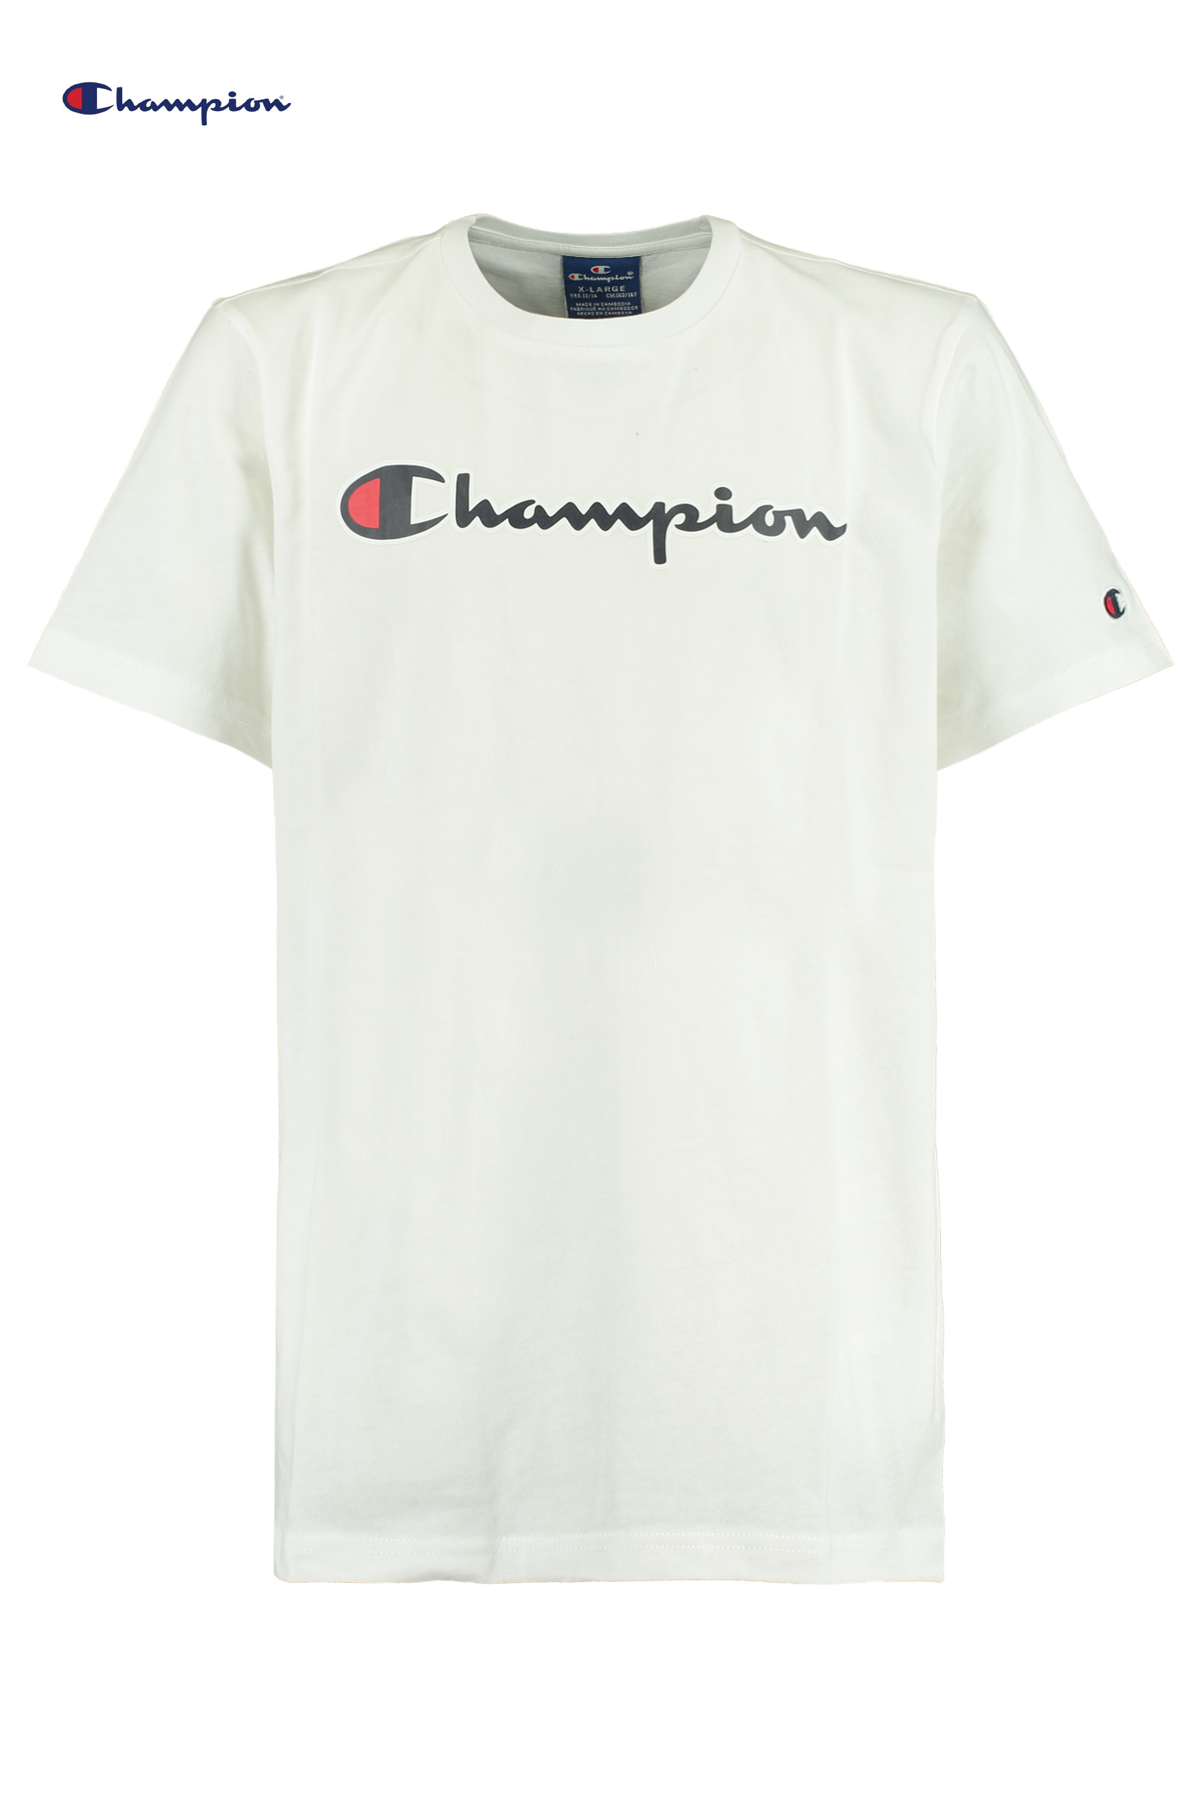 Boys T-shirt Champion logo White | America Today